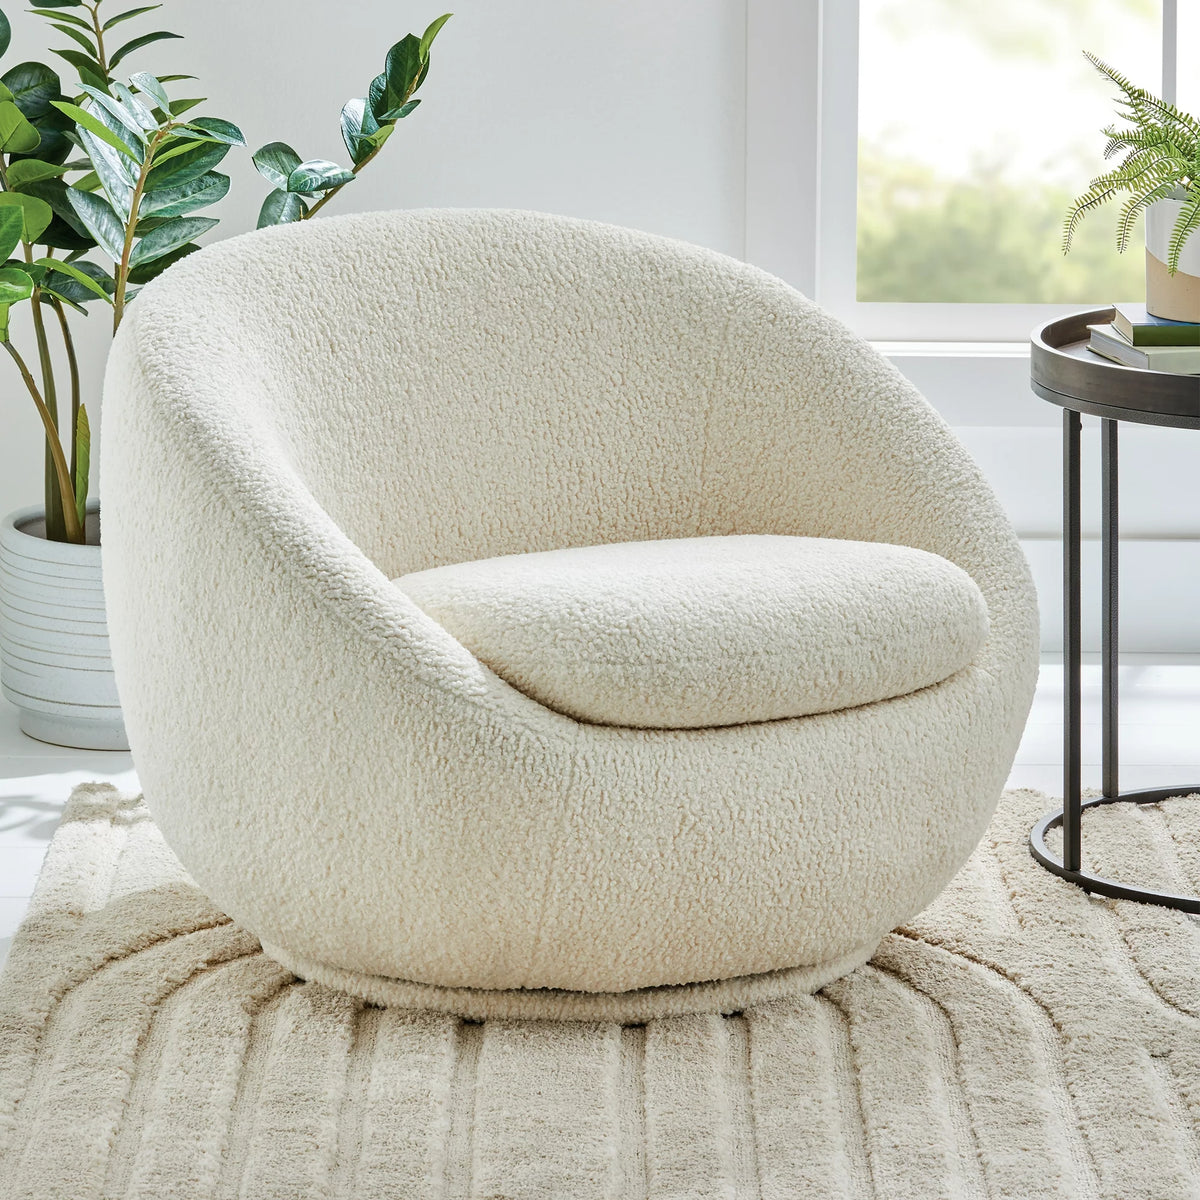 Mira Swivel Chair, Cream - Modern Comfort for Any Room